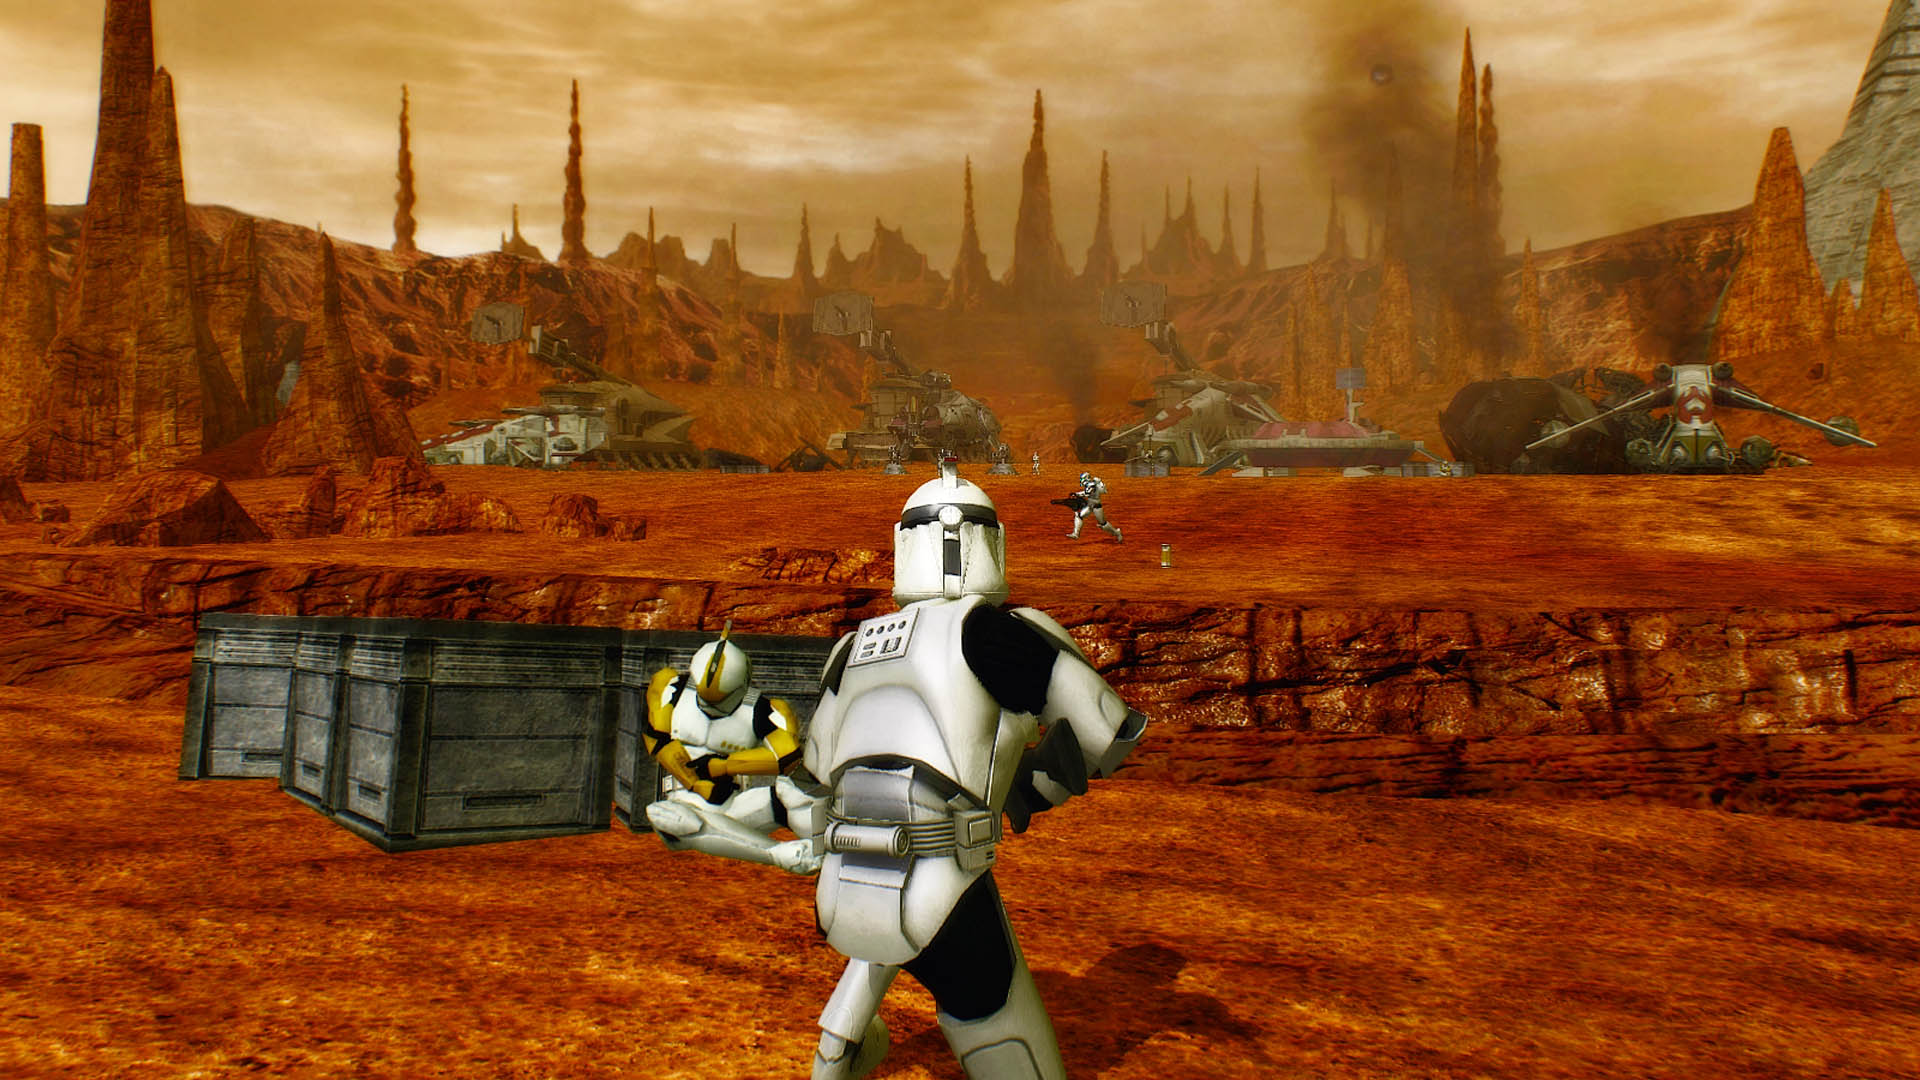 star wars battlefront 2 graphics mod 2016